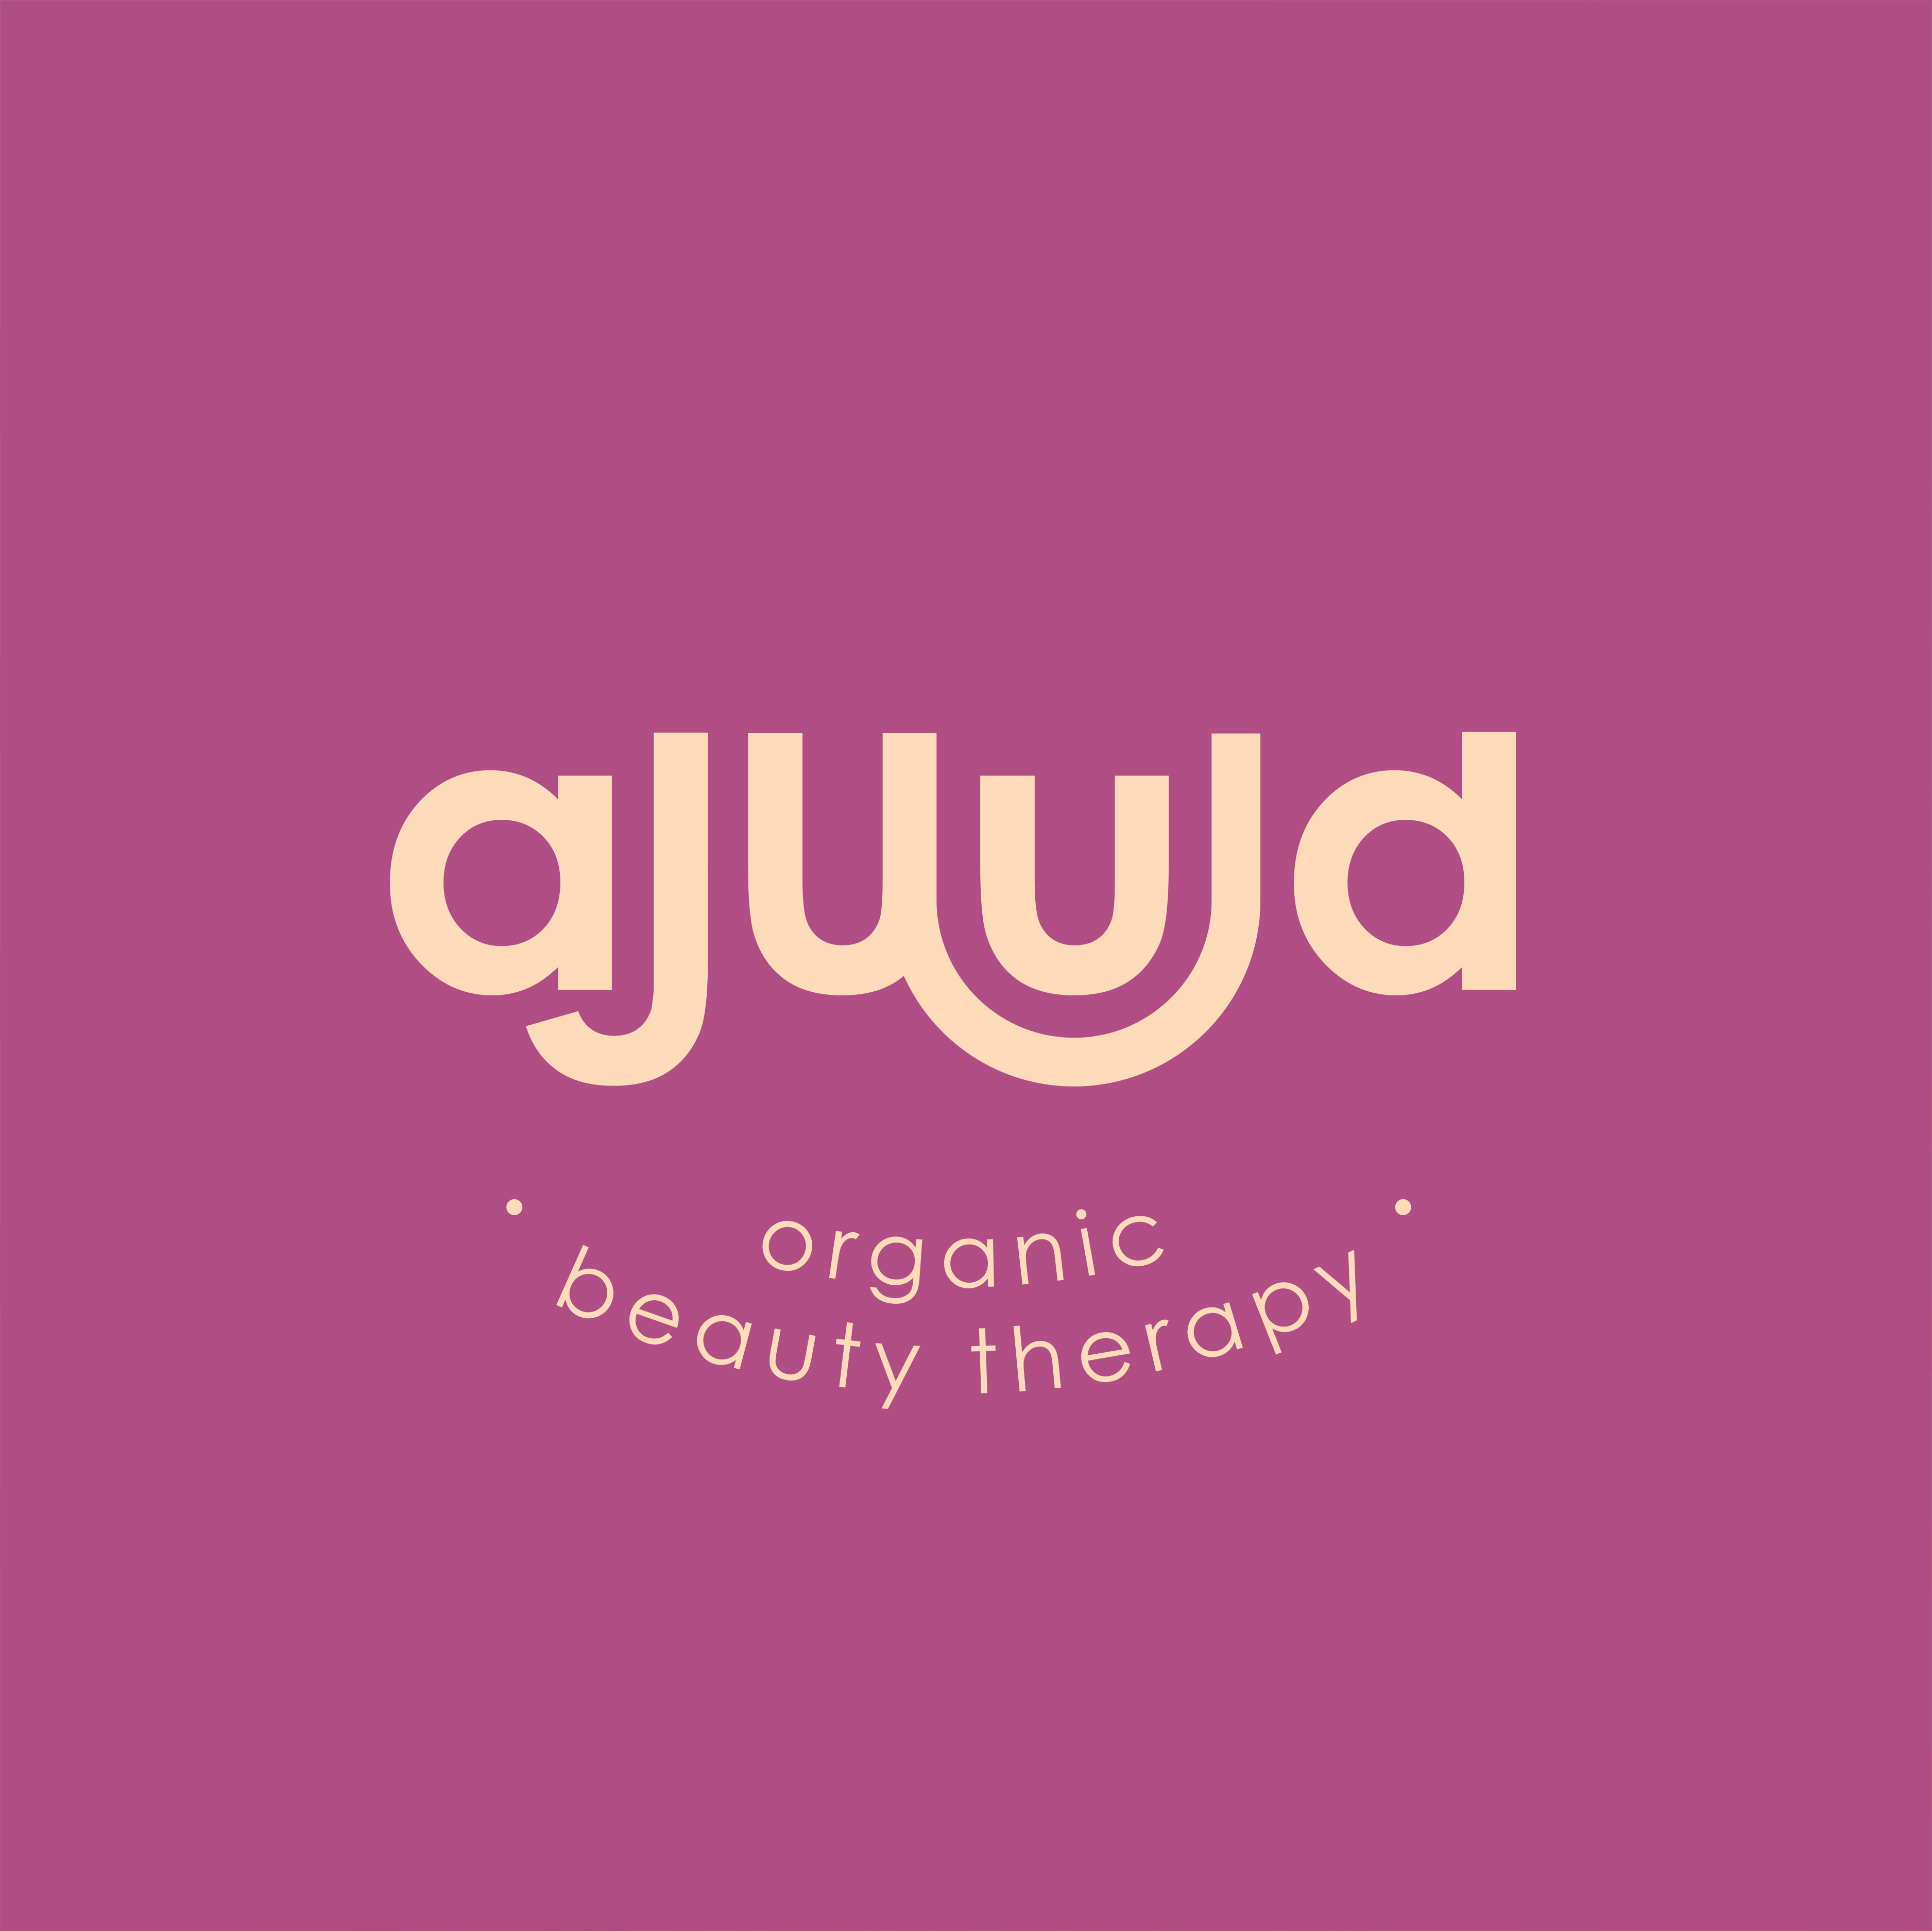 Ajwud Natural Cosmetics // Oman